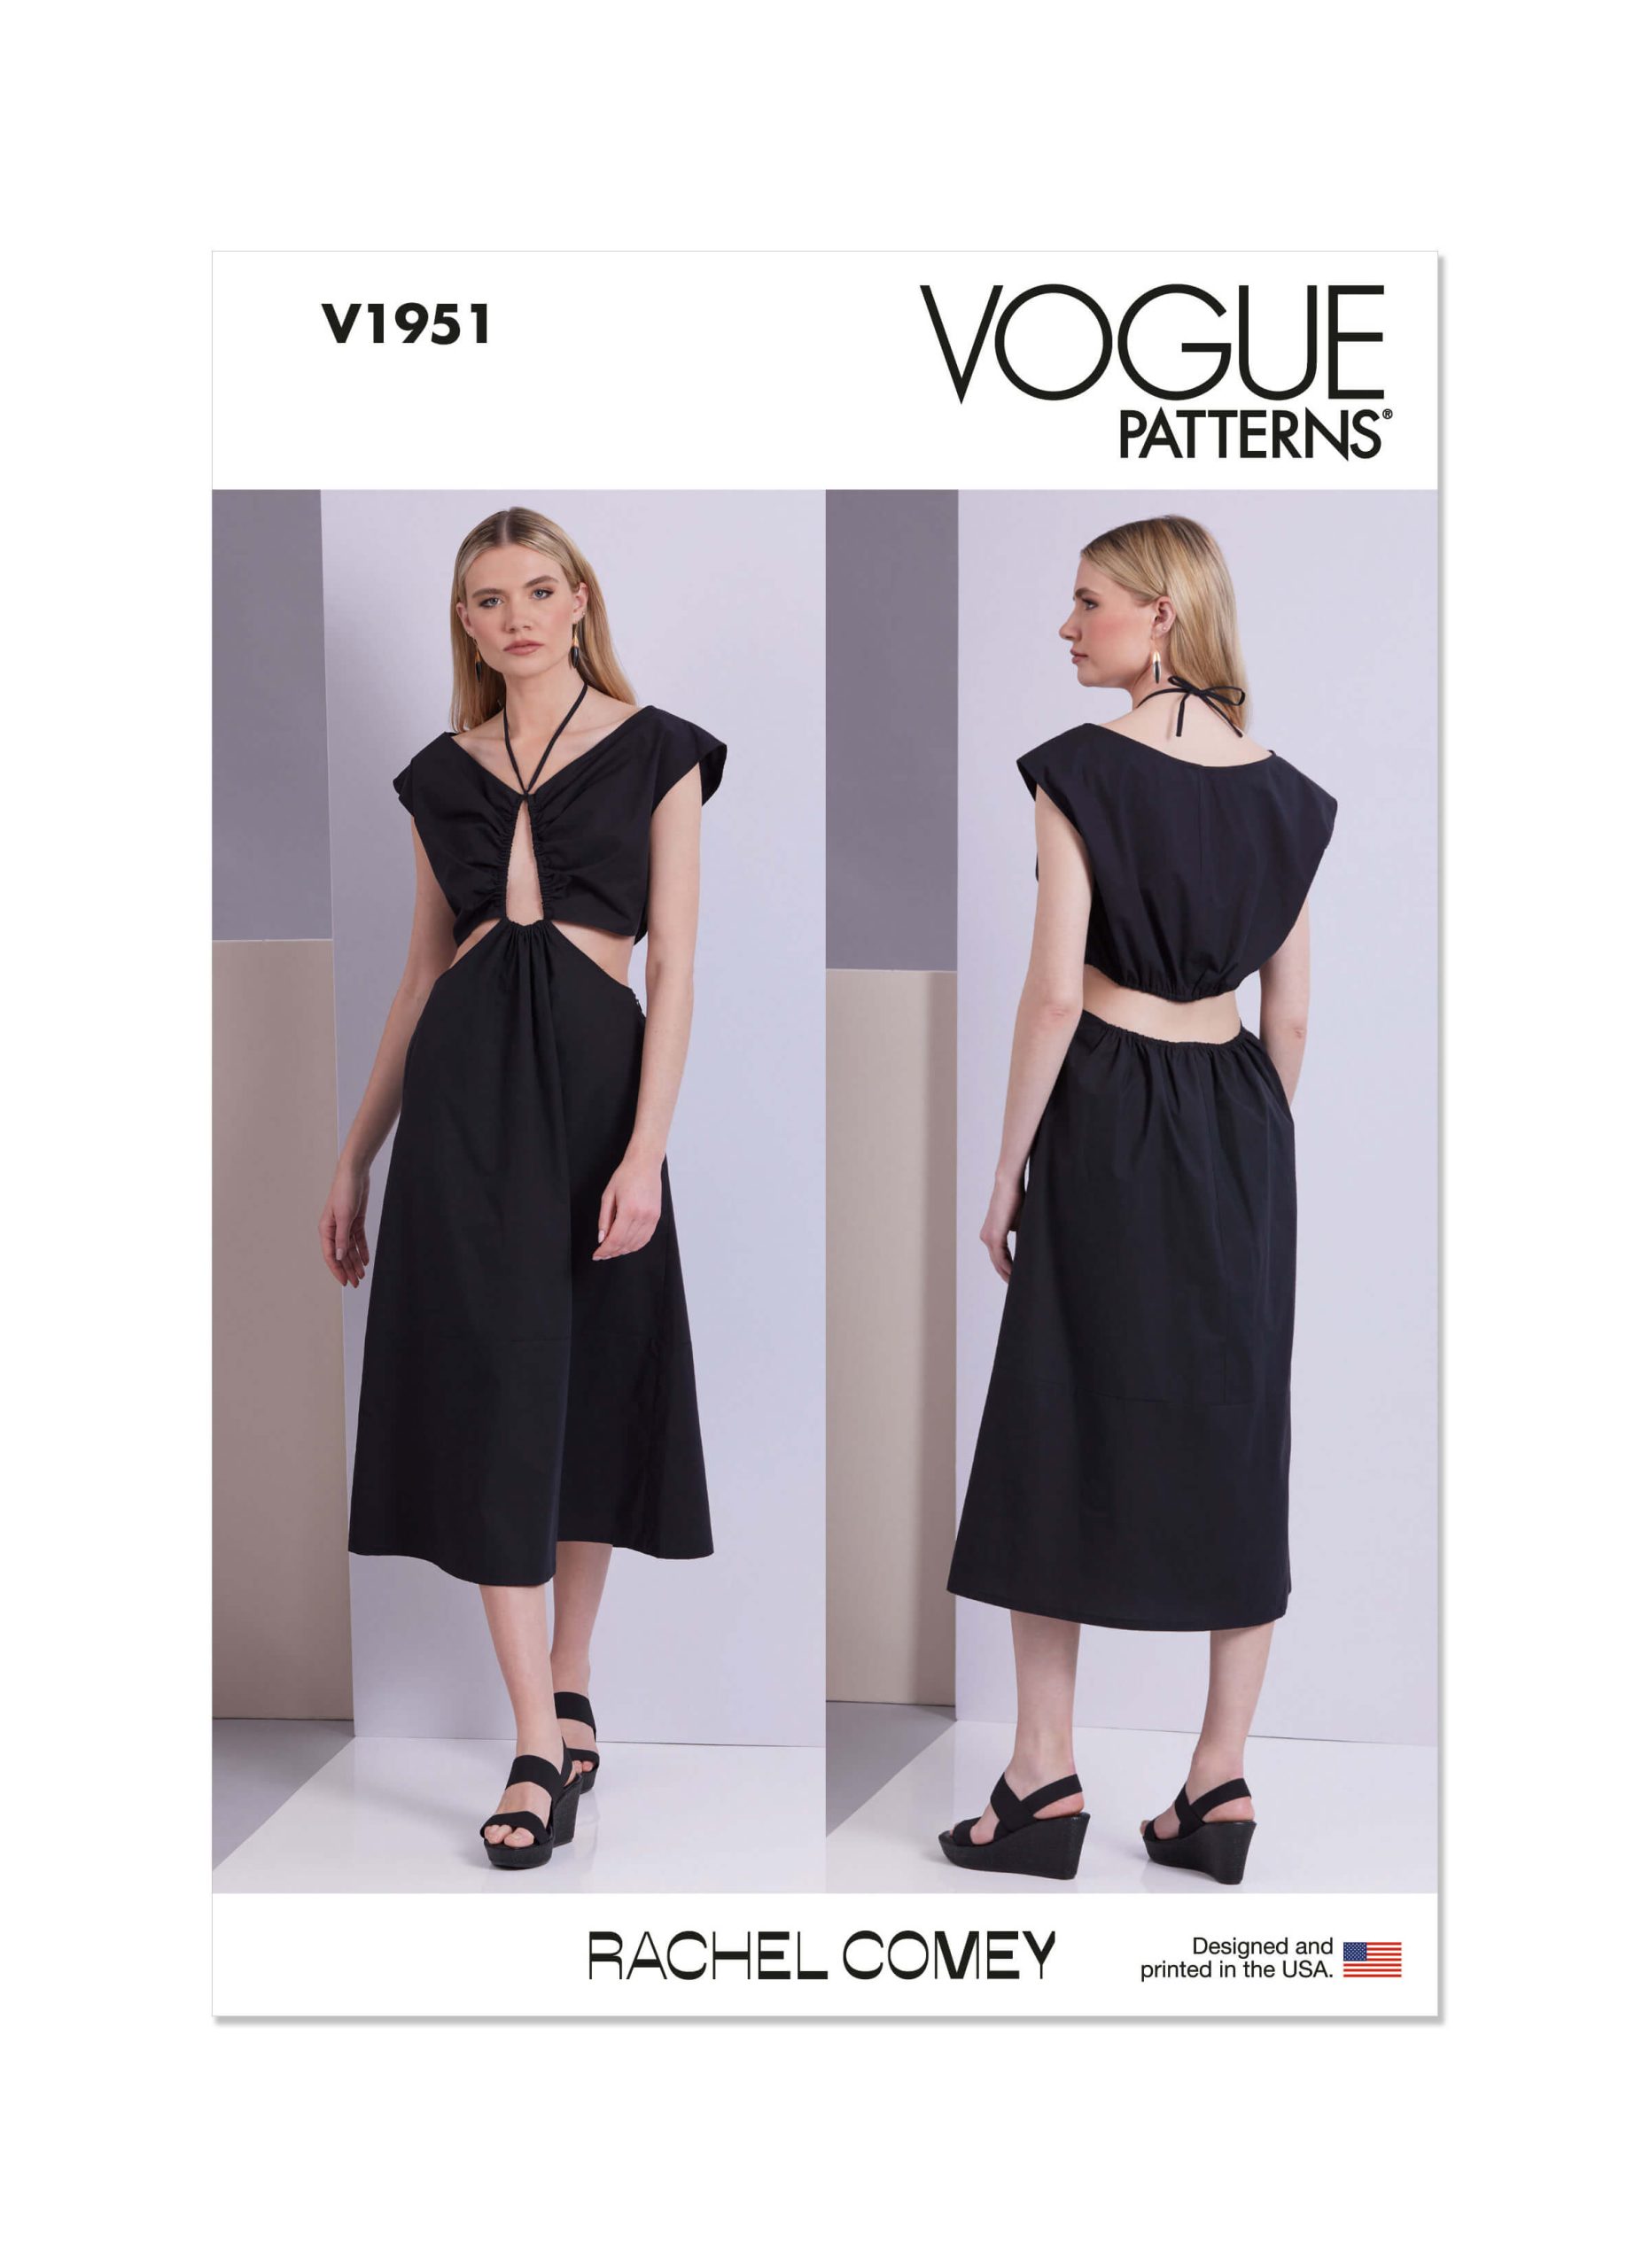 Vogue Patterns V1951 Misses' Dress by Rachel Comey